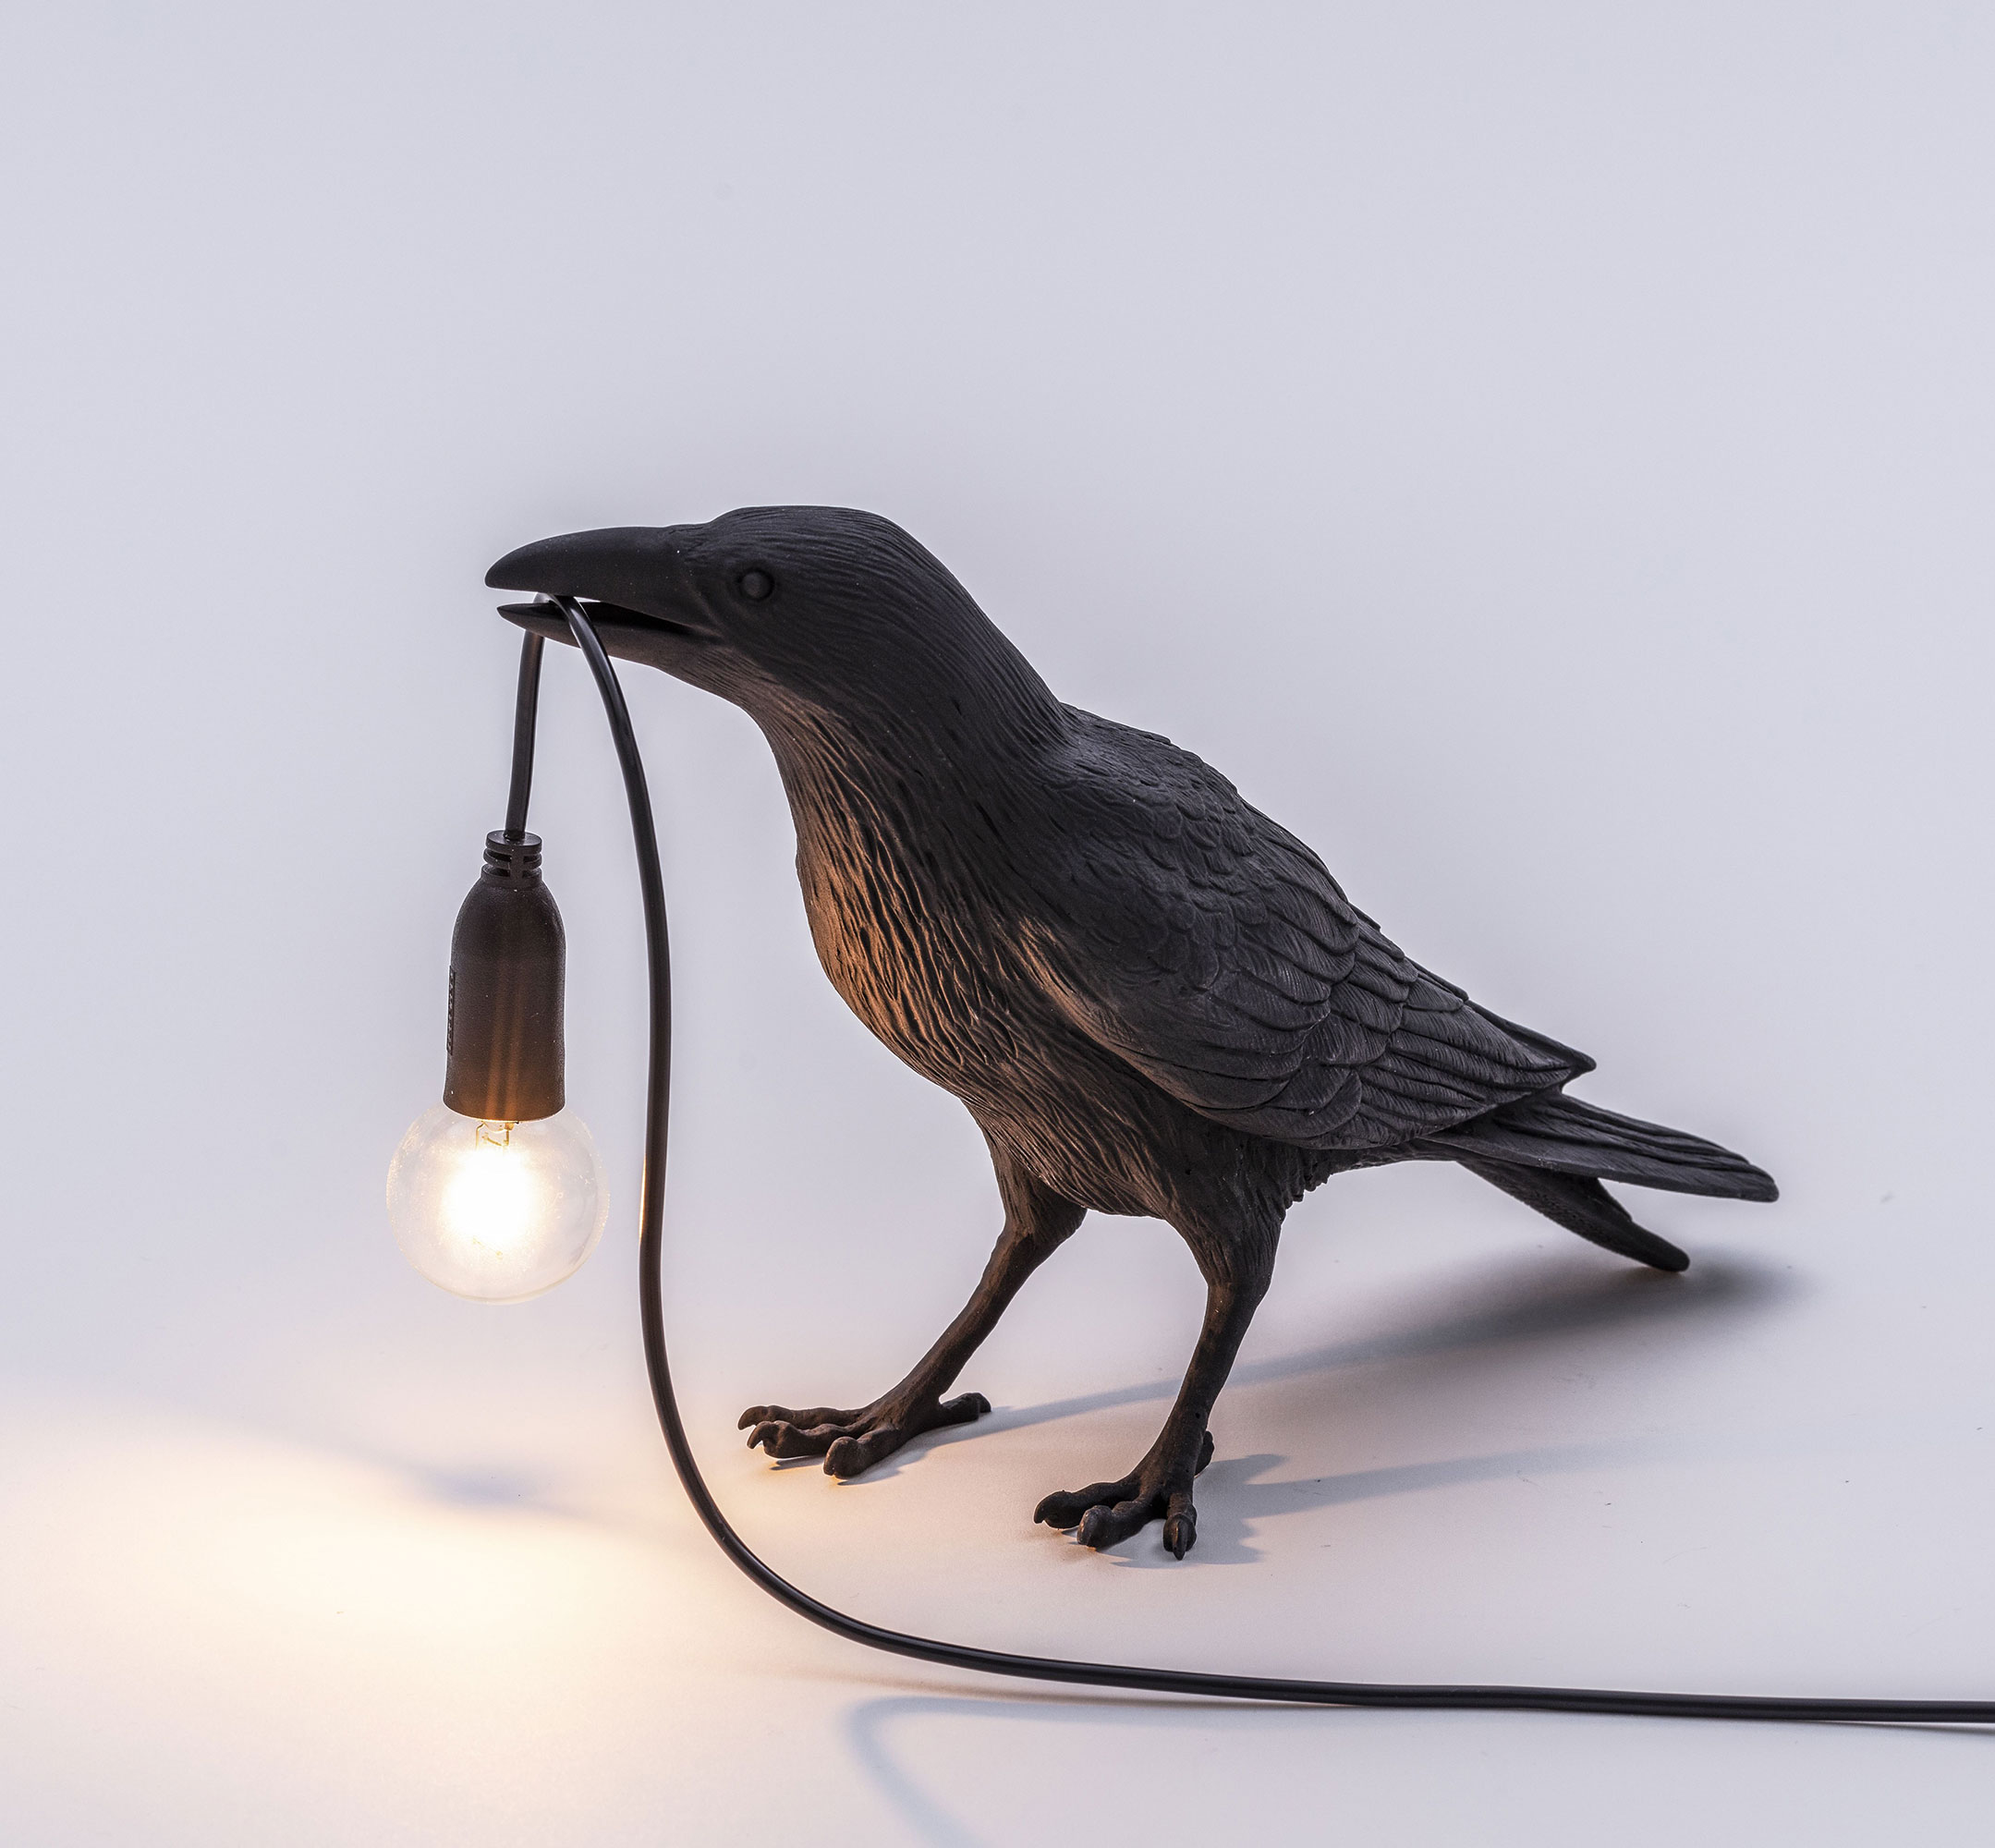 Seletti Rabenleuchte Bird Lamp waiting